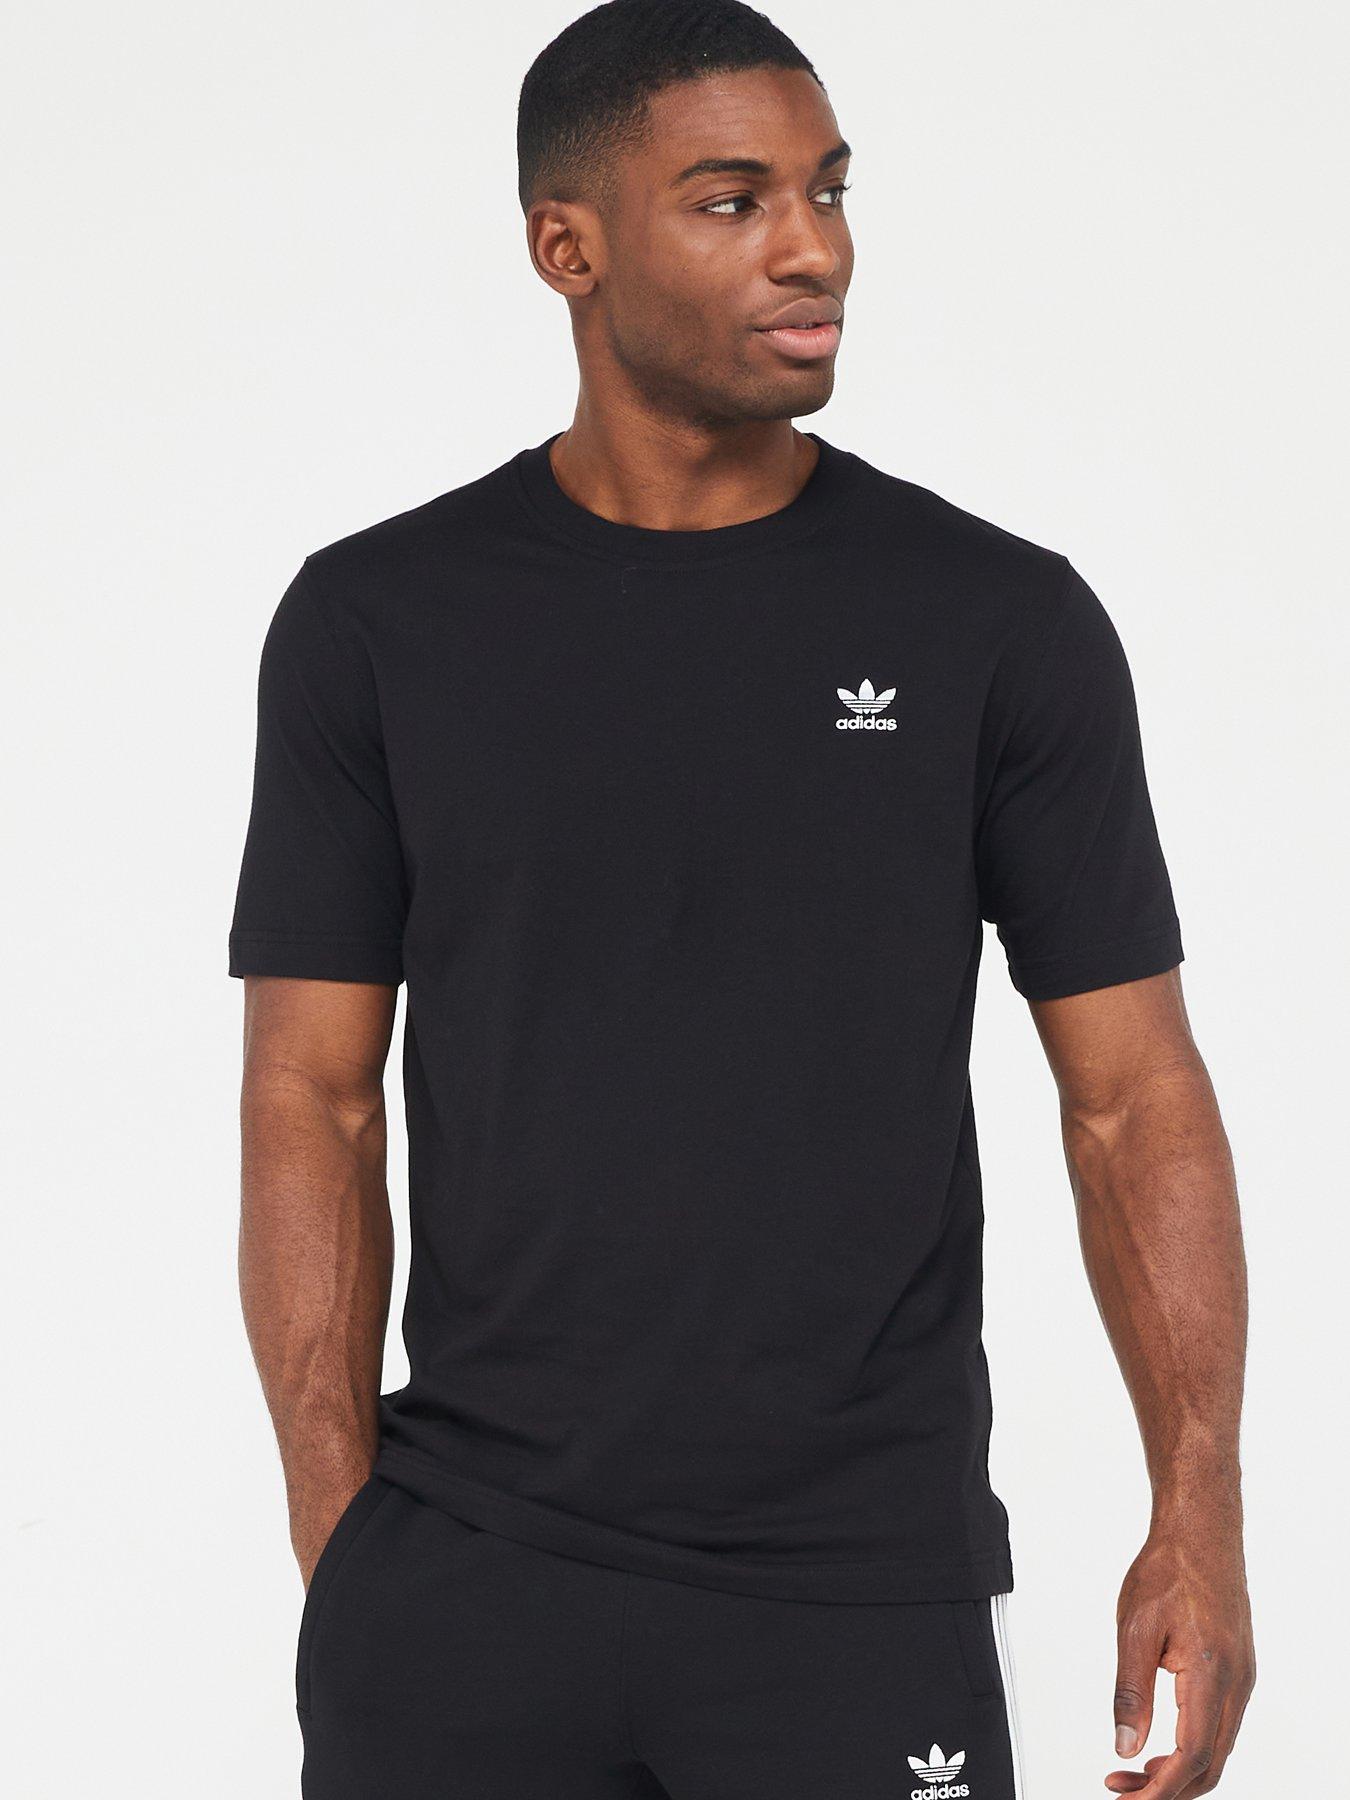 adidas Originals Men's Essential Trefoil T-Shirt - Black | very.co.uk